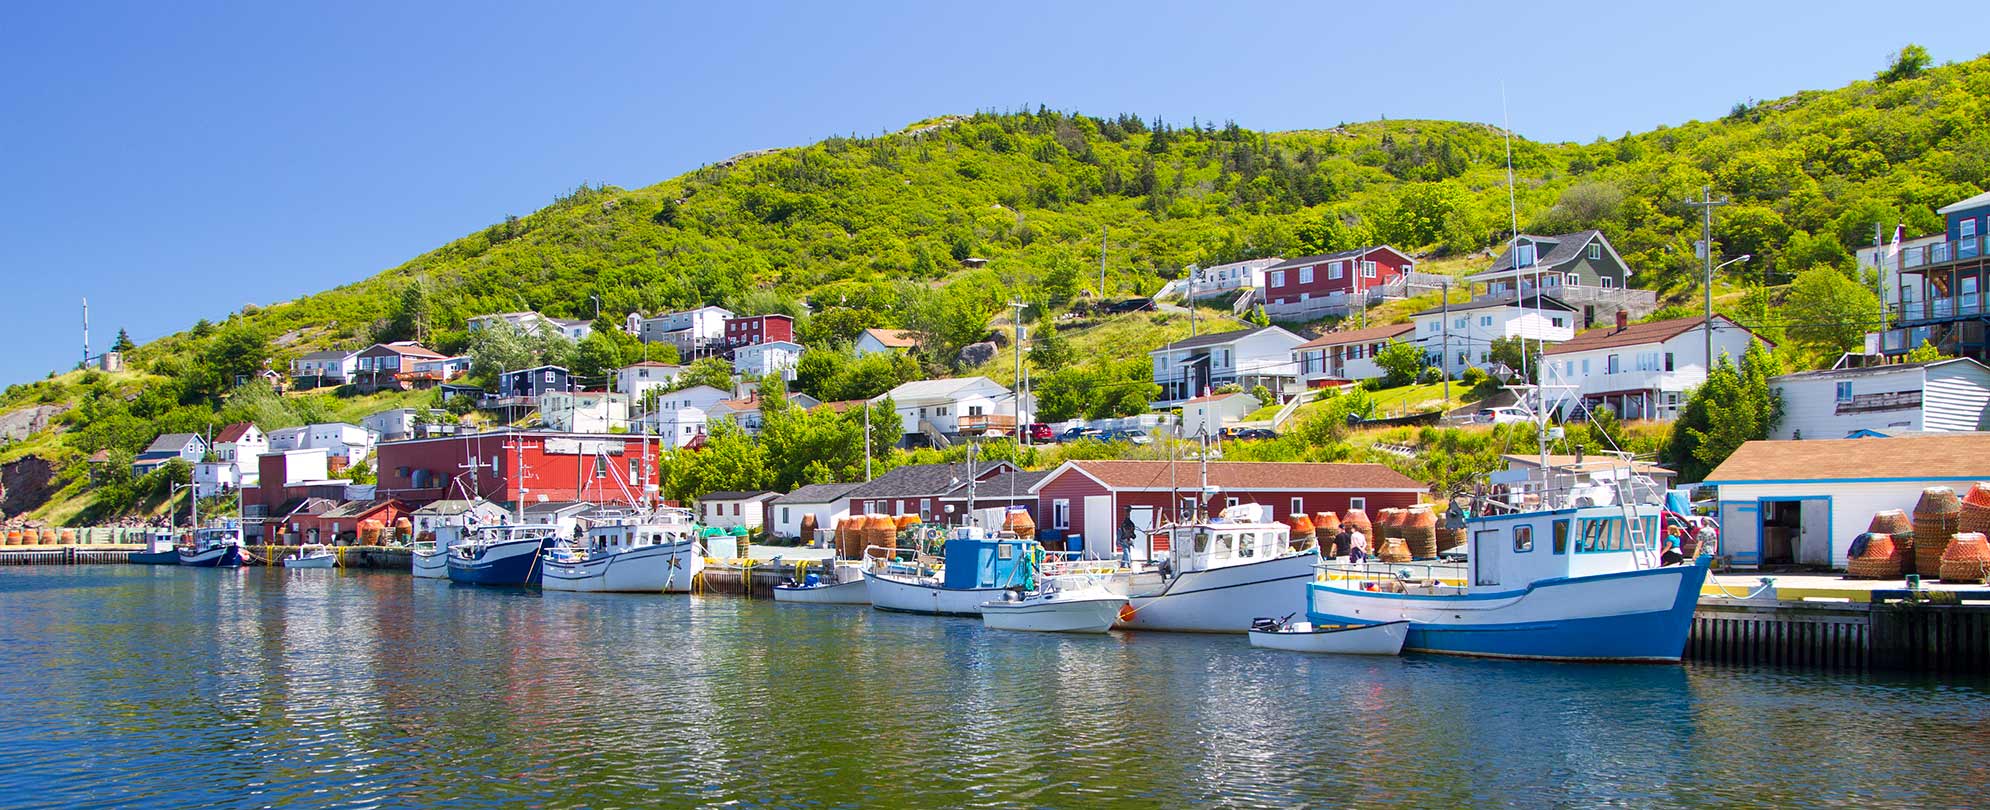 St. John, a city on Newfoundland island off Canada's Atlantic coast.